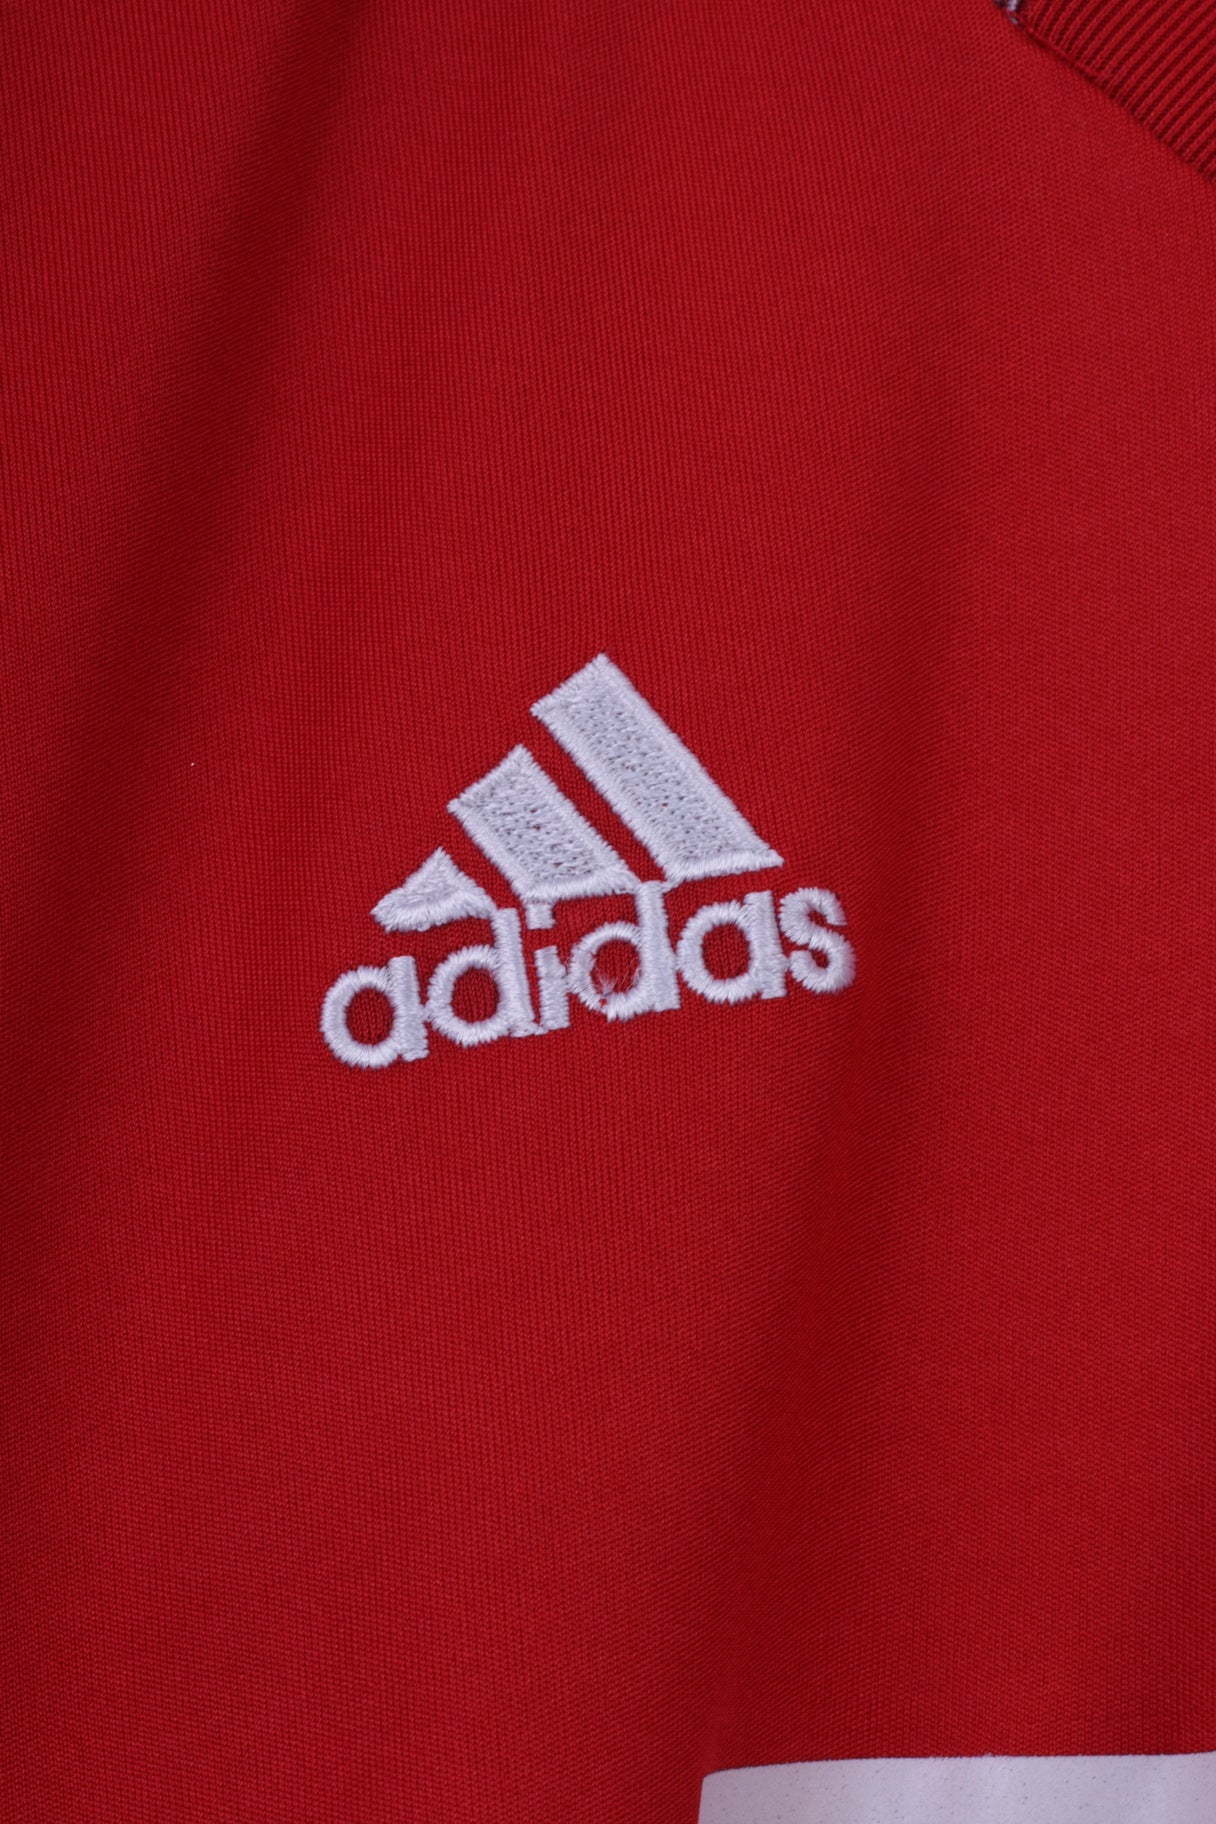 Adidas Womens 10 M Shirt red Bayern Munchen Football #7 Ribery Jersey Top